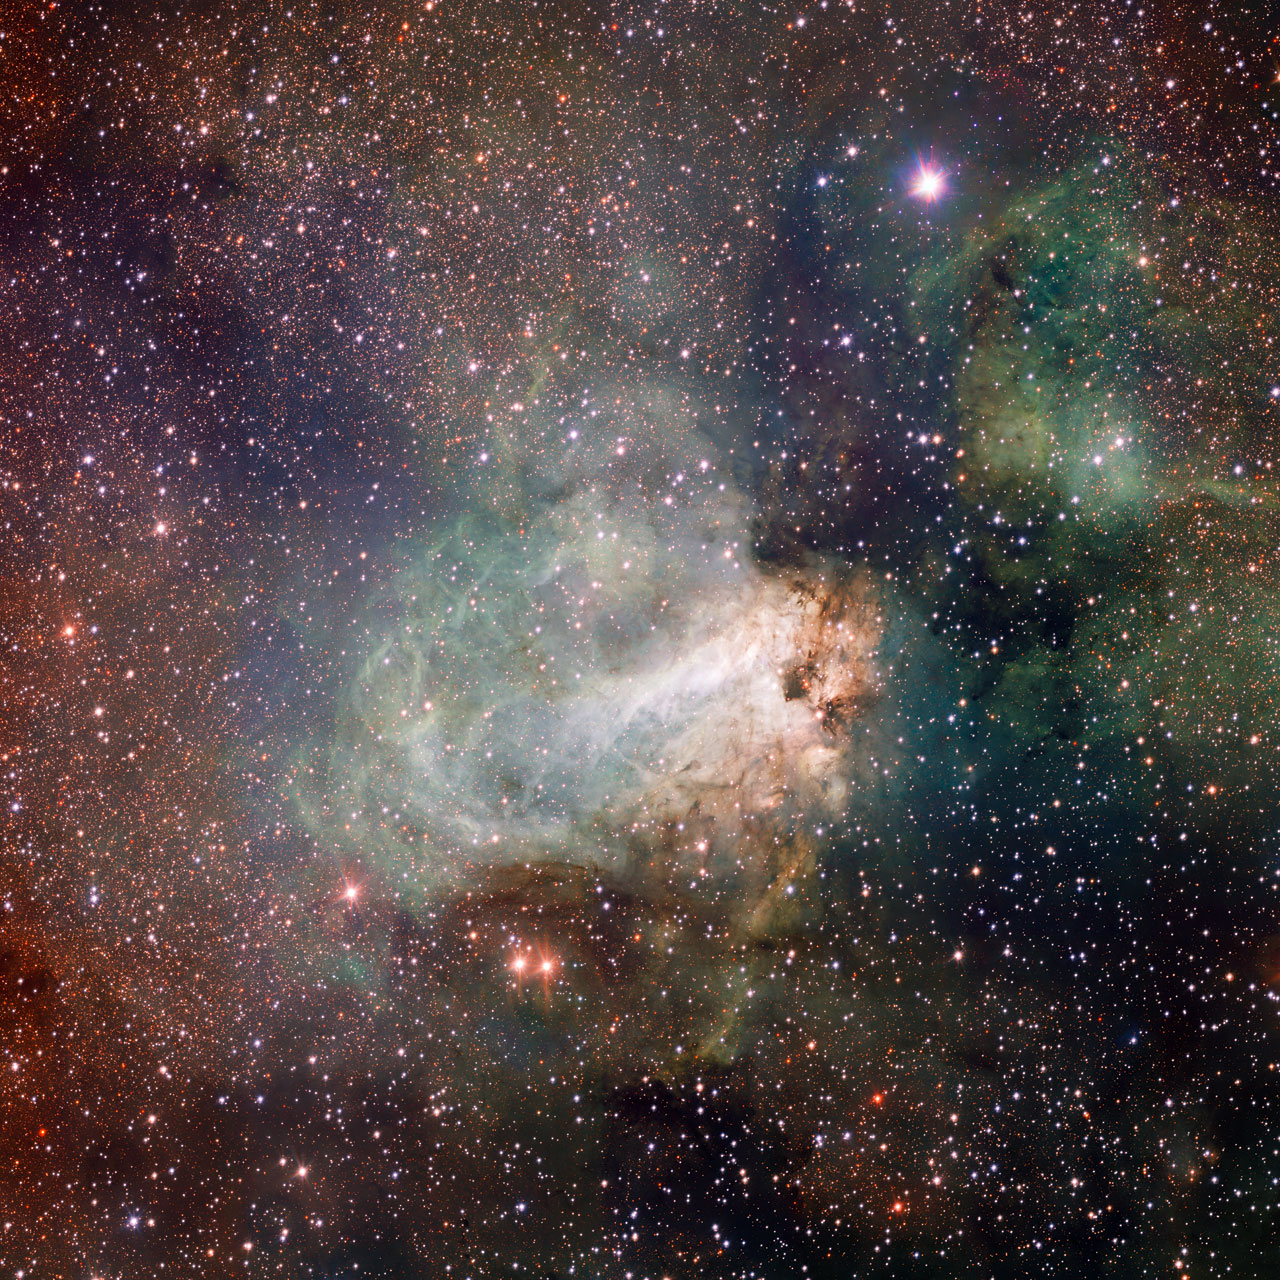 VST image of the star-forming region Messier 17